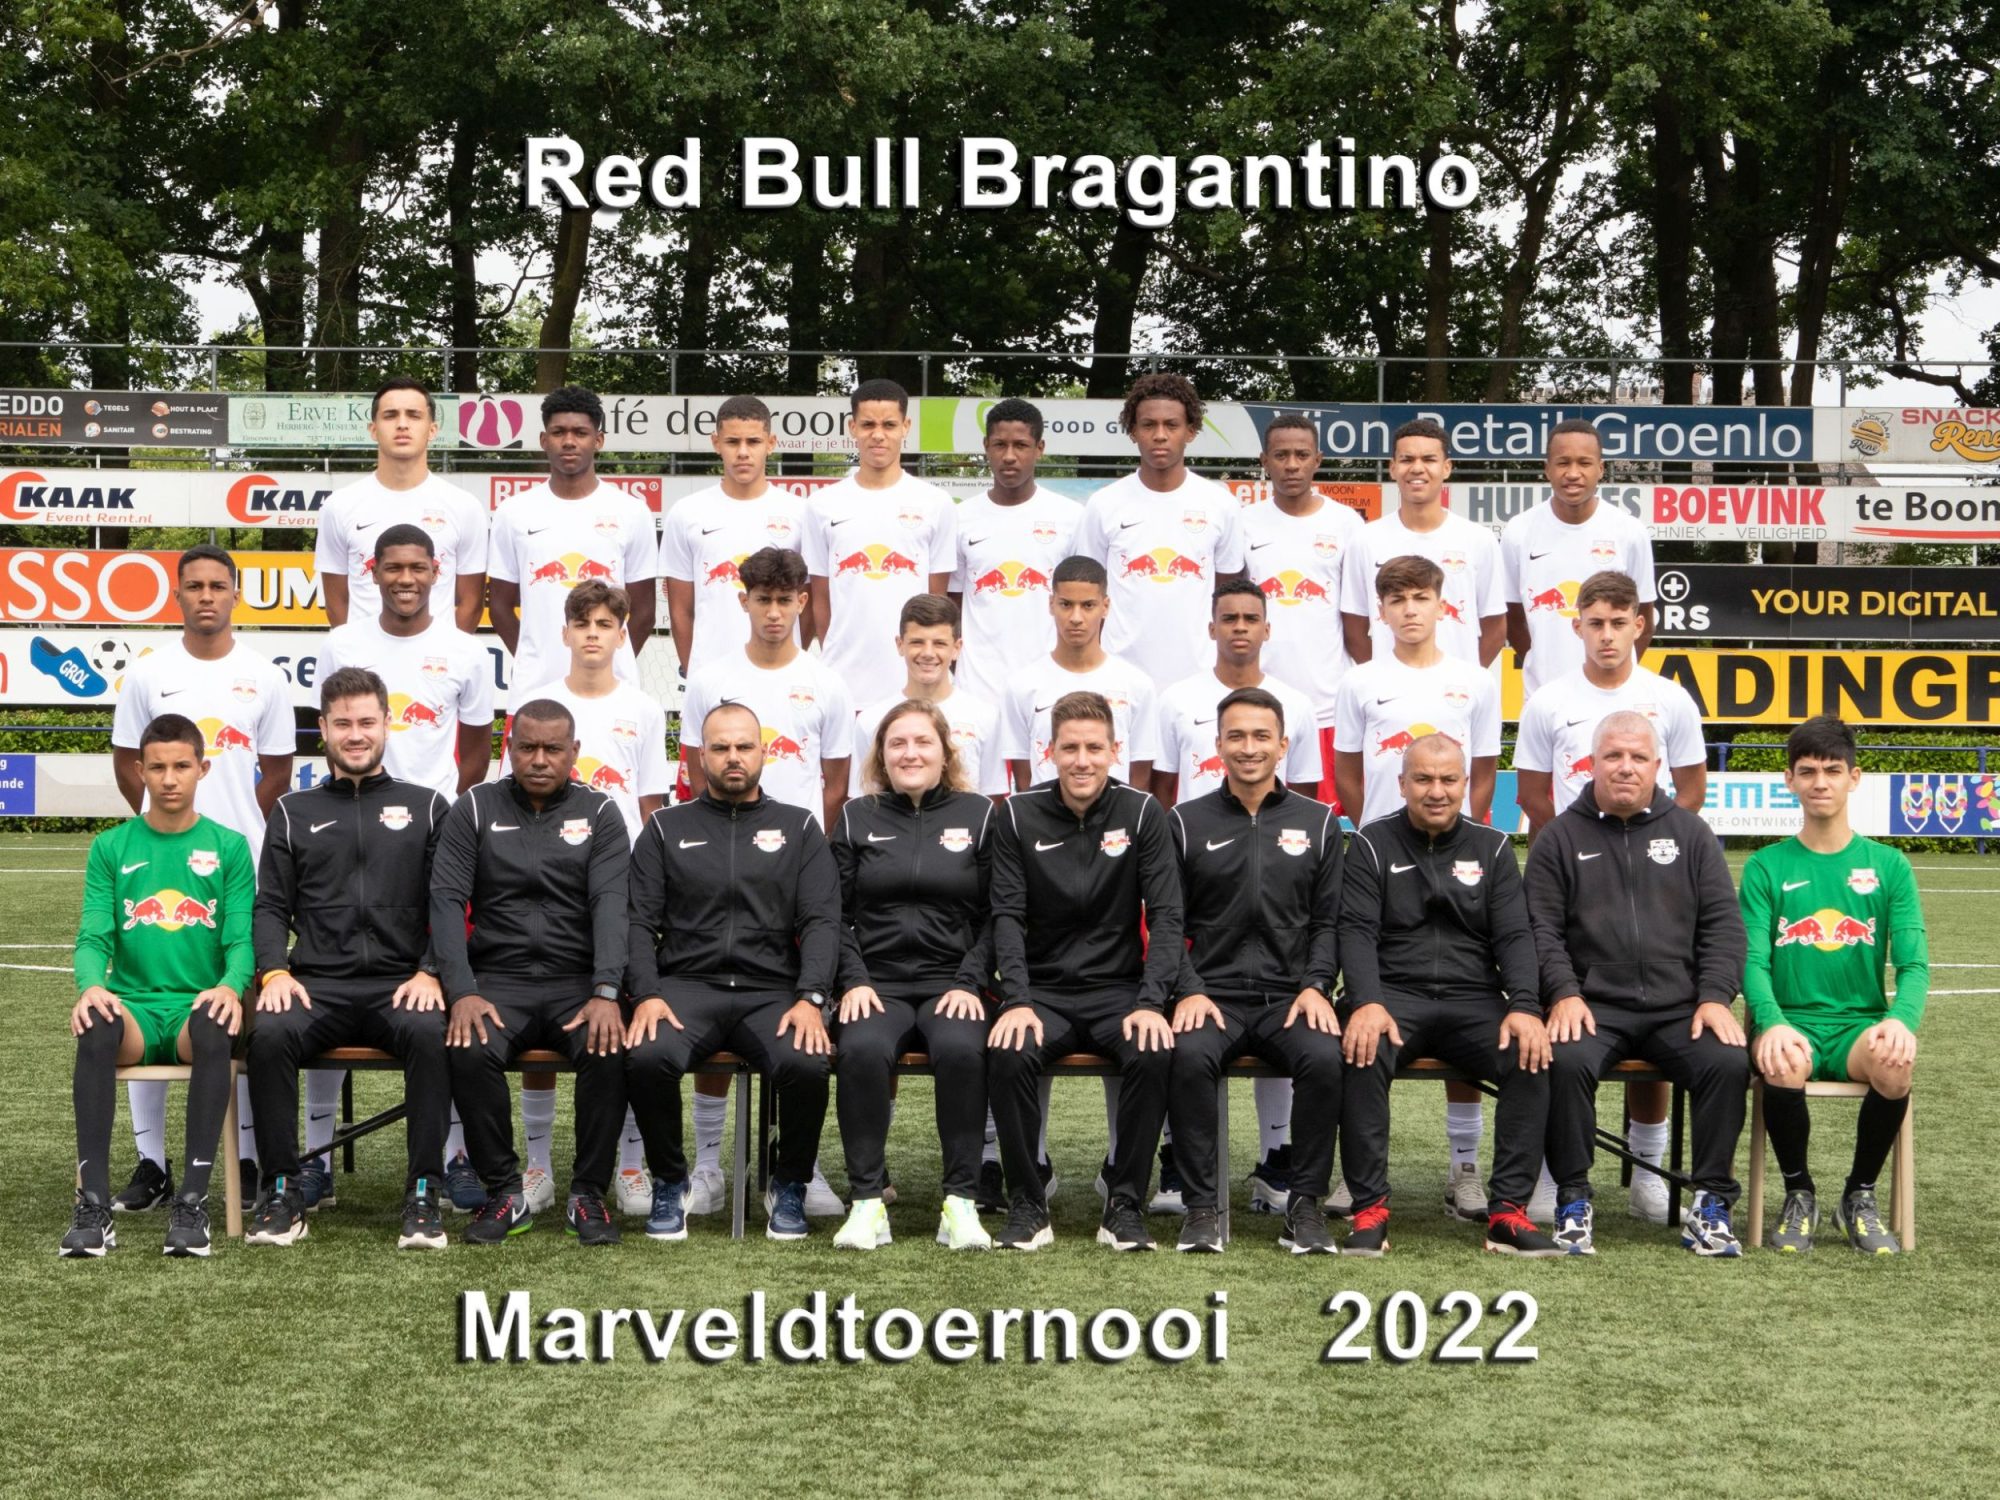 Marveld Tournament 2022 - Team Red Bull Bragantino